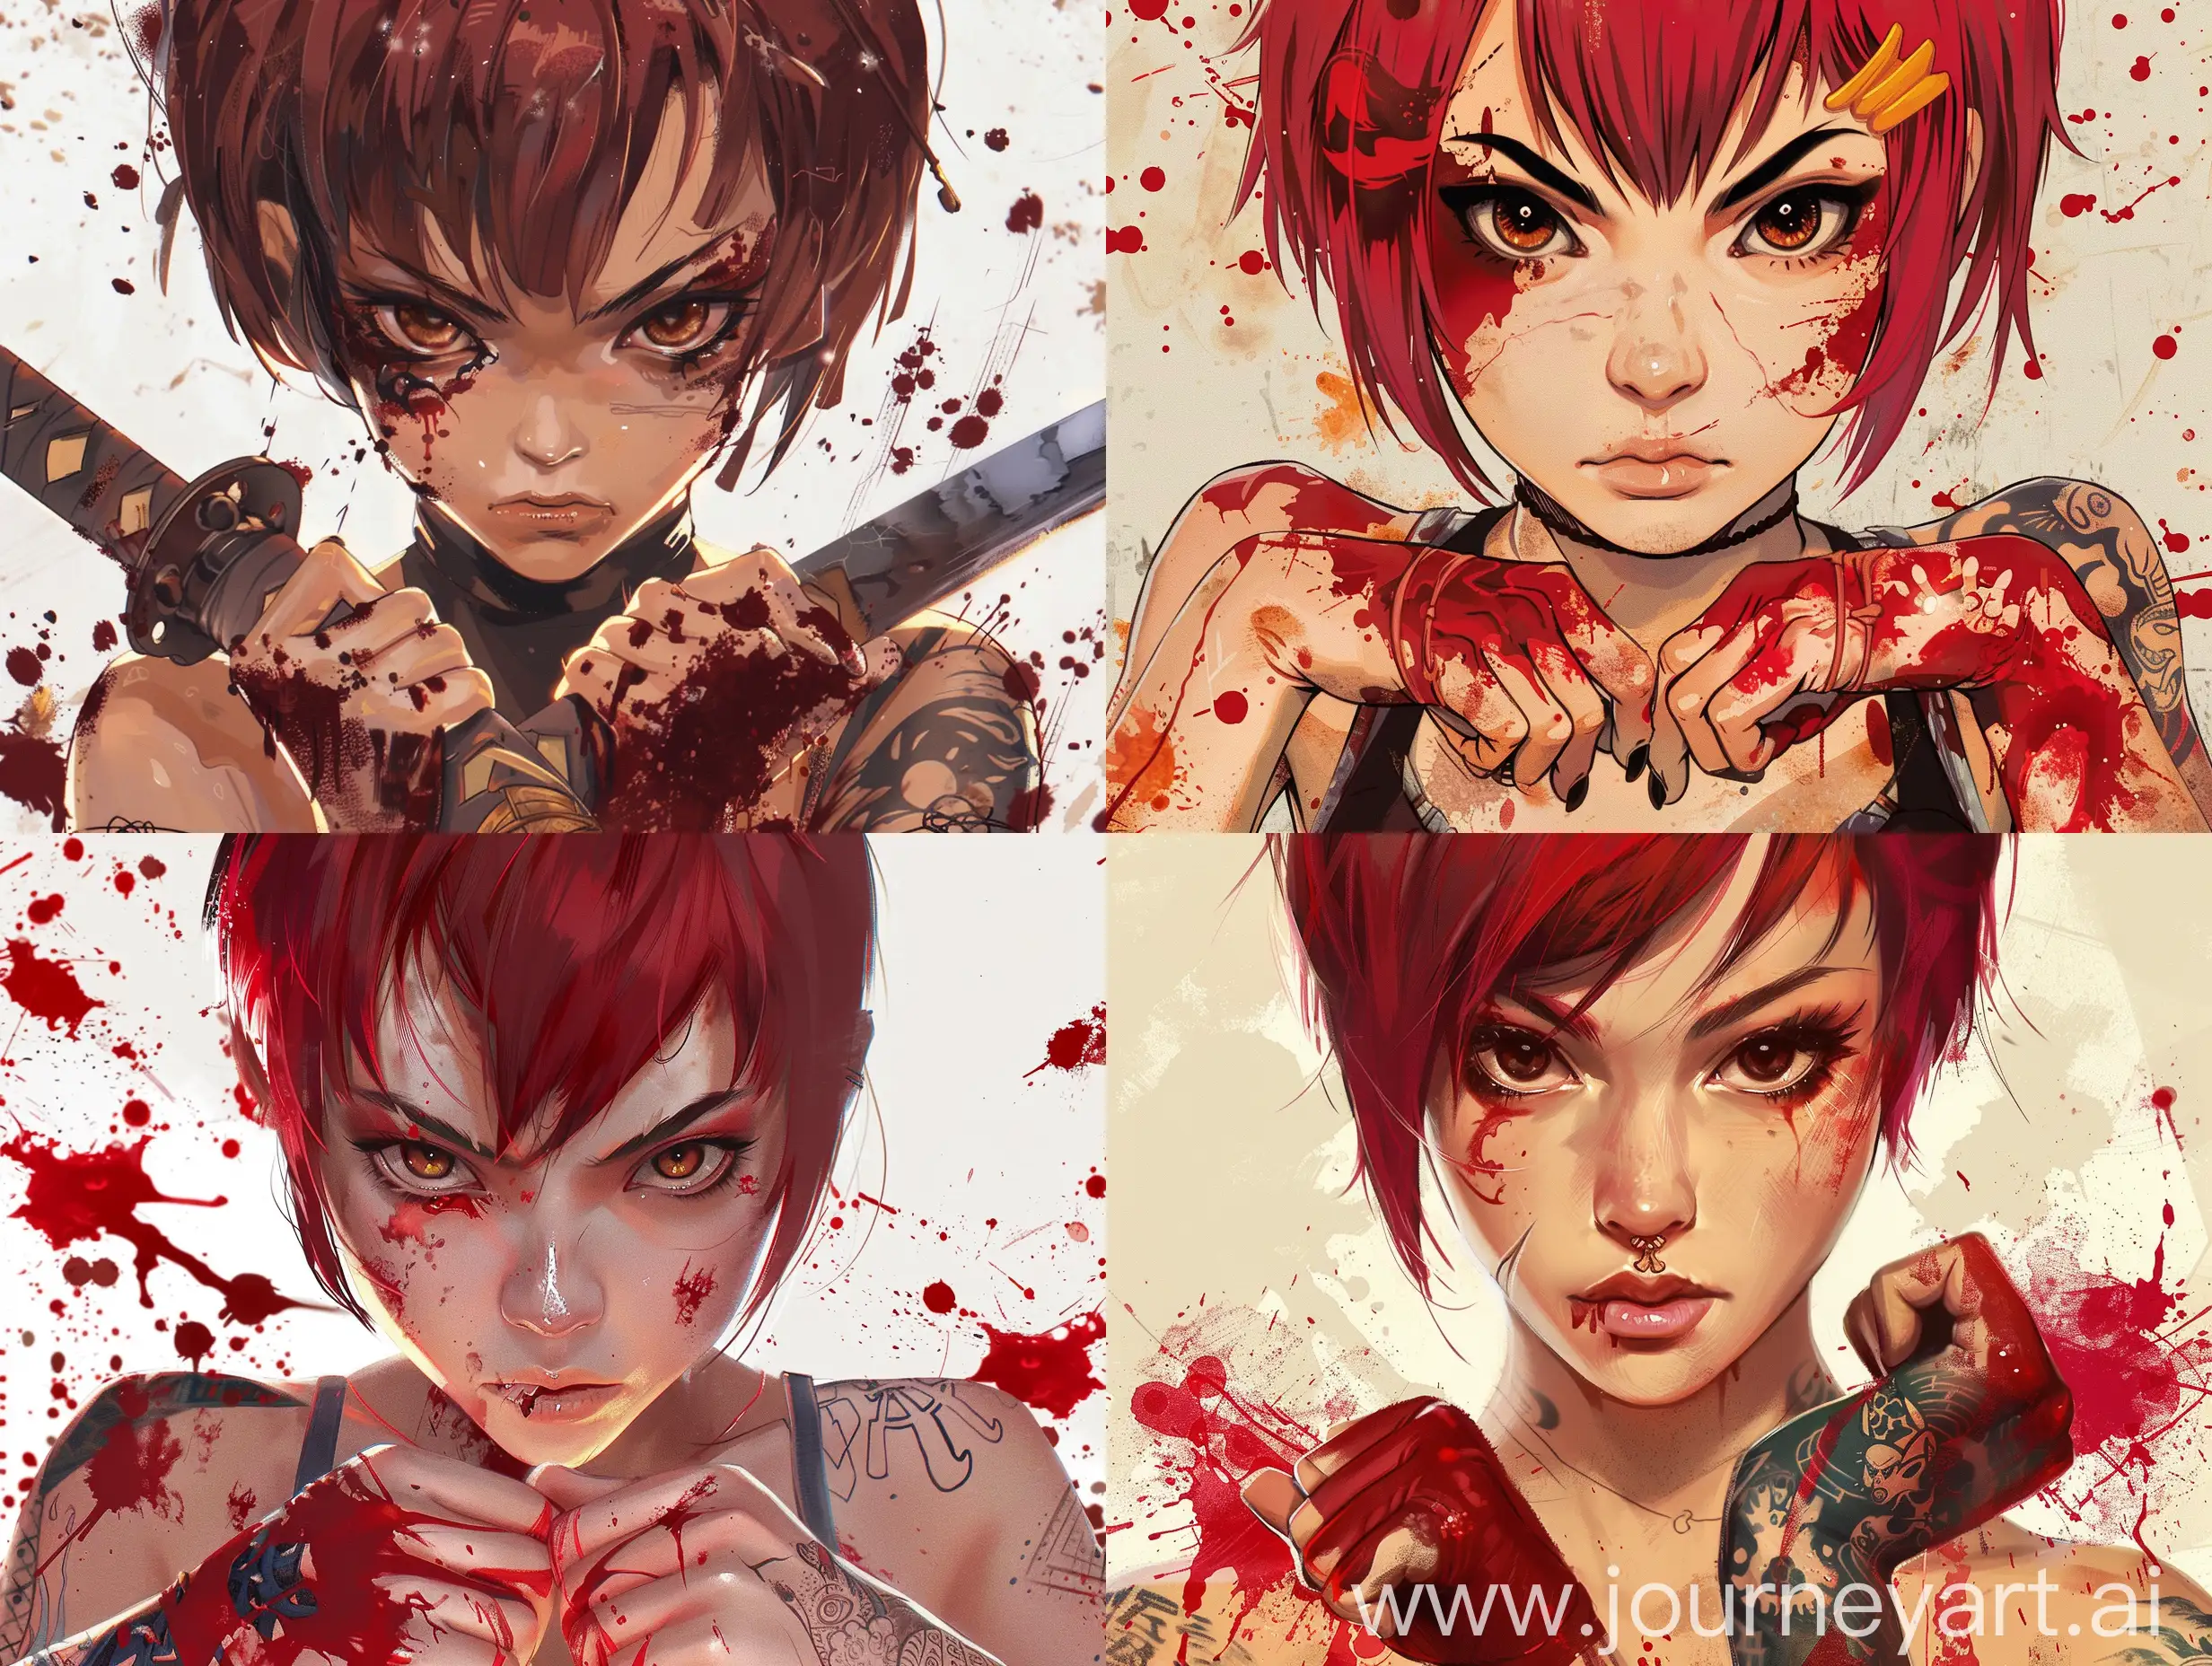 samurai teen girl, brown eyes, blood splashes, short red hair, tattoo on hands, musculature